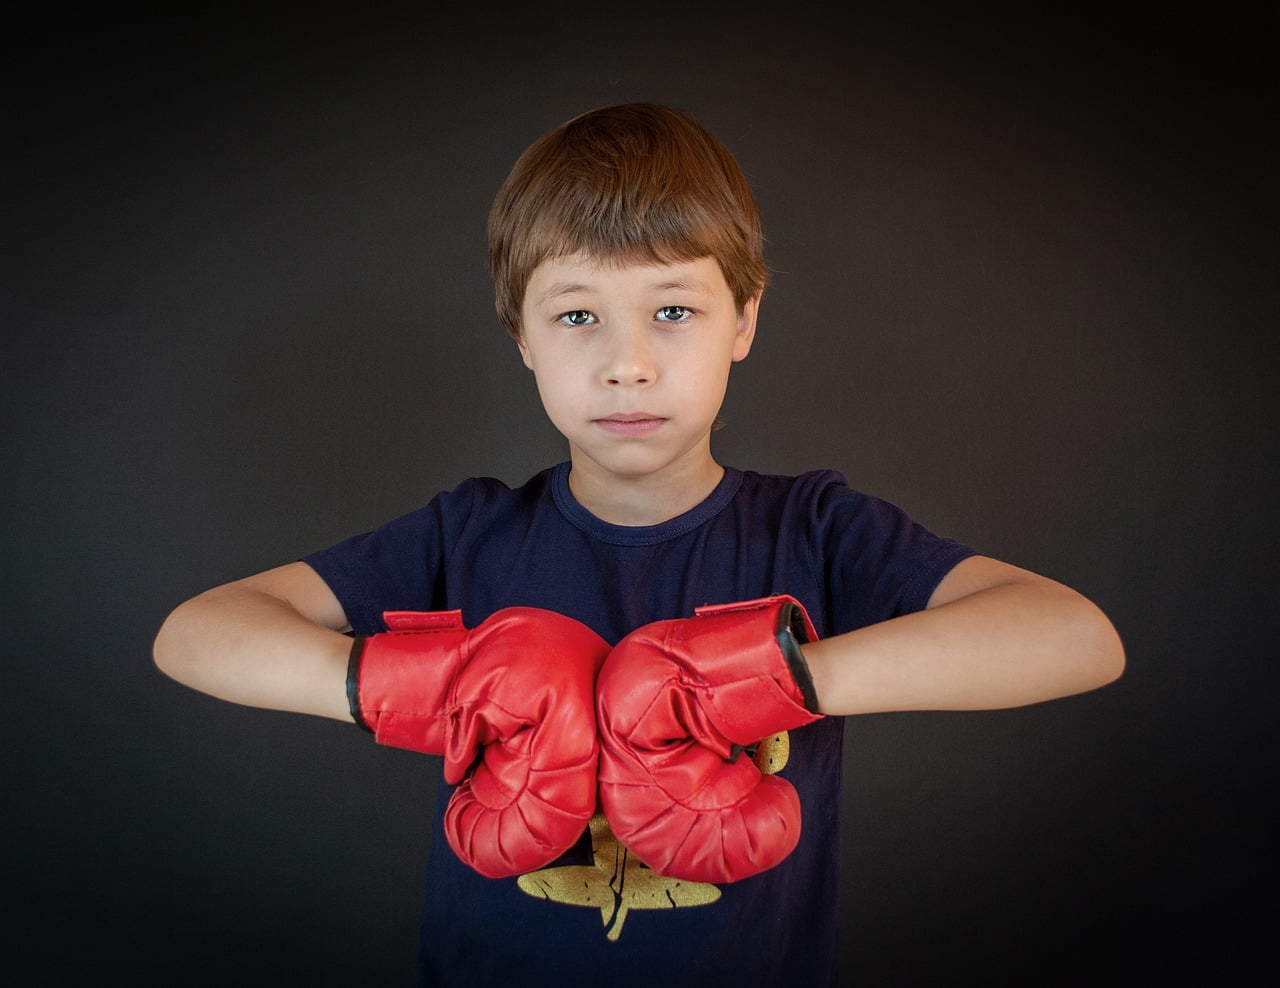 boxing gloves for kids